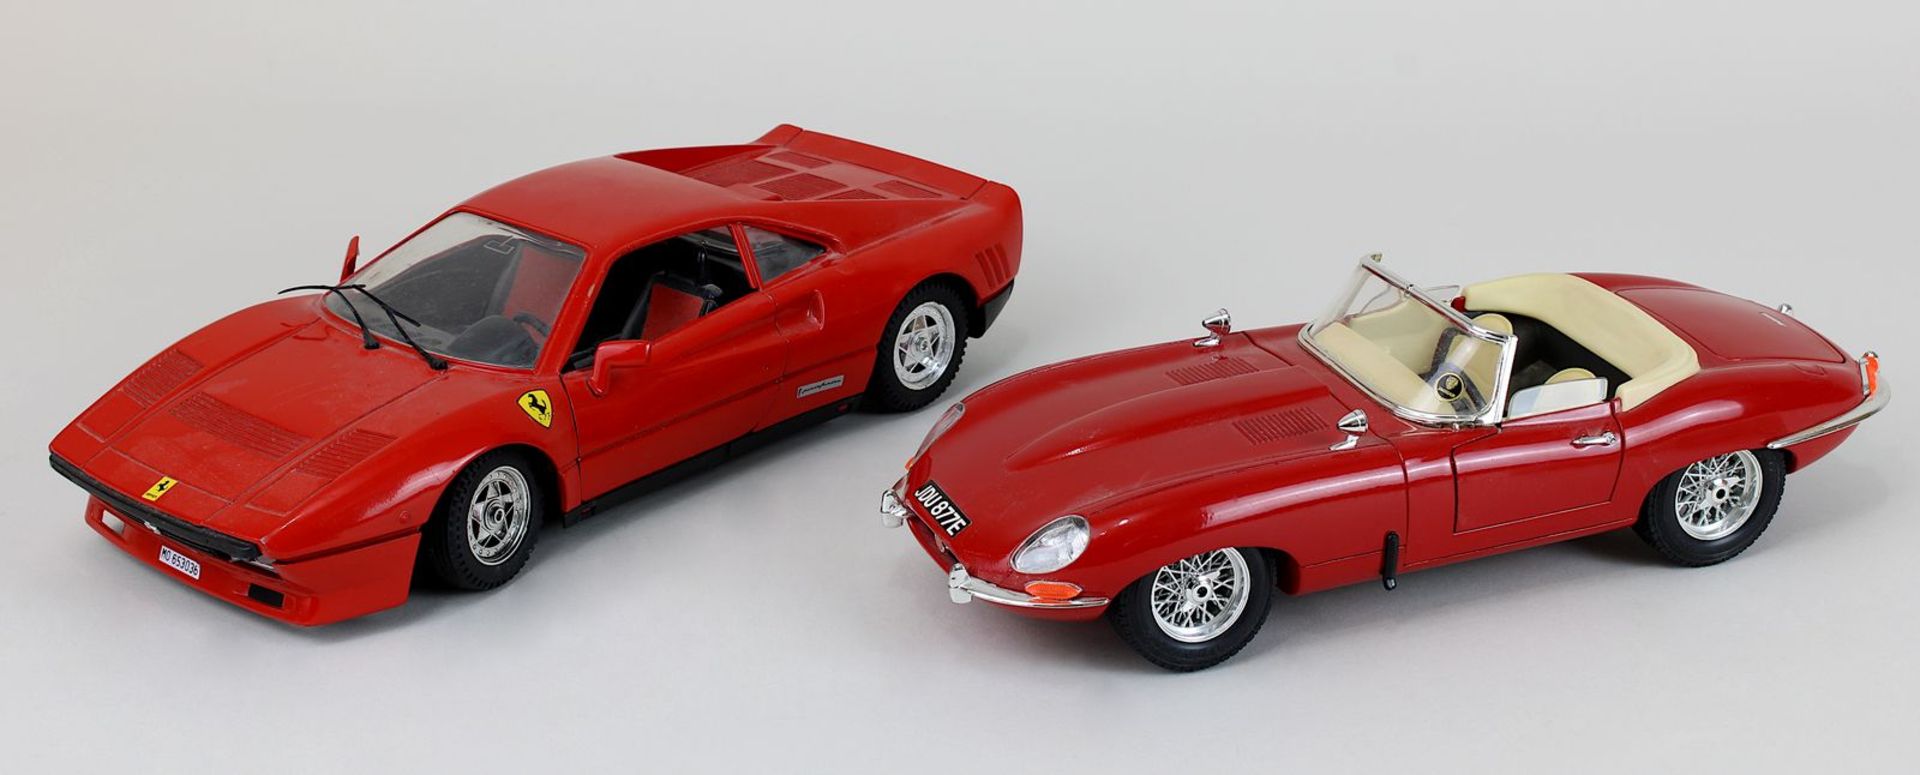 Zwei Modellautos, Italien, Burago Jaguar "E" 1961, gem. "3016 3018", Maße 1 : 18, Tonka Polistil